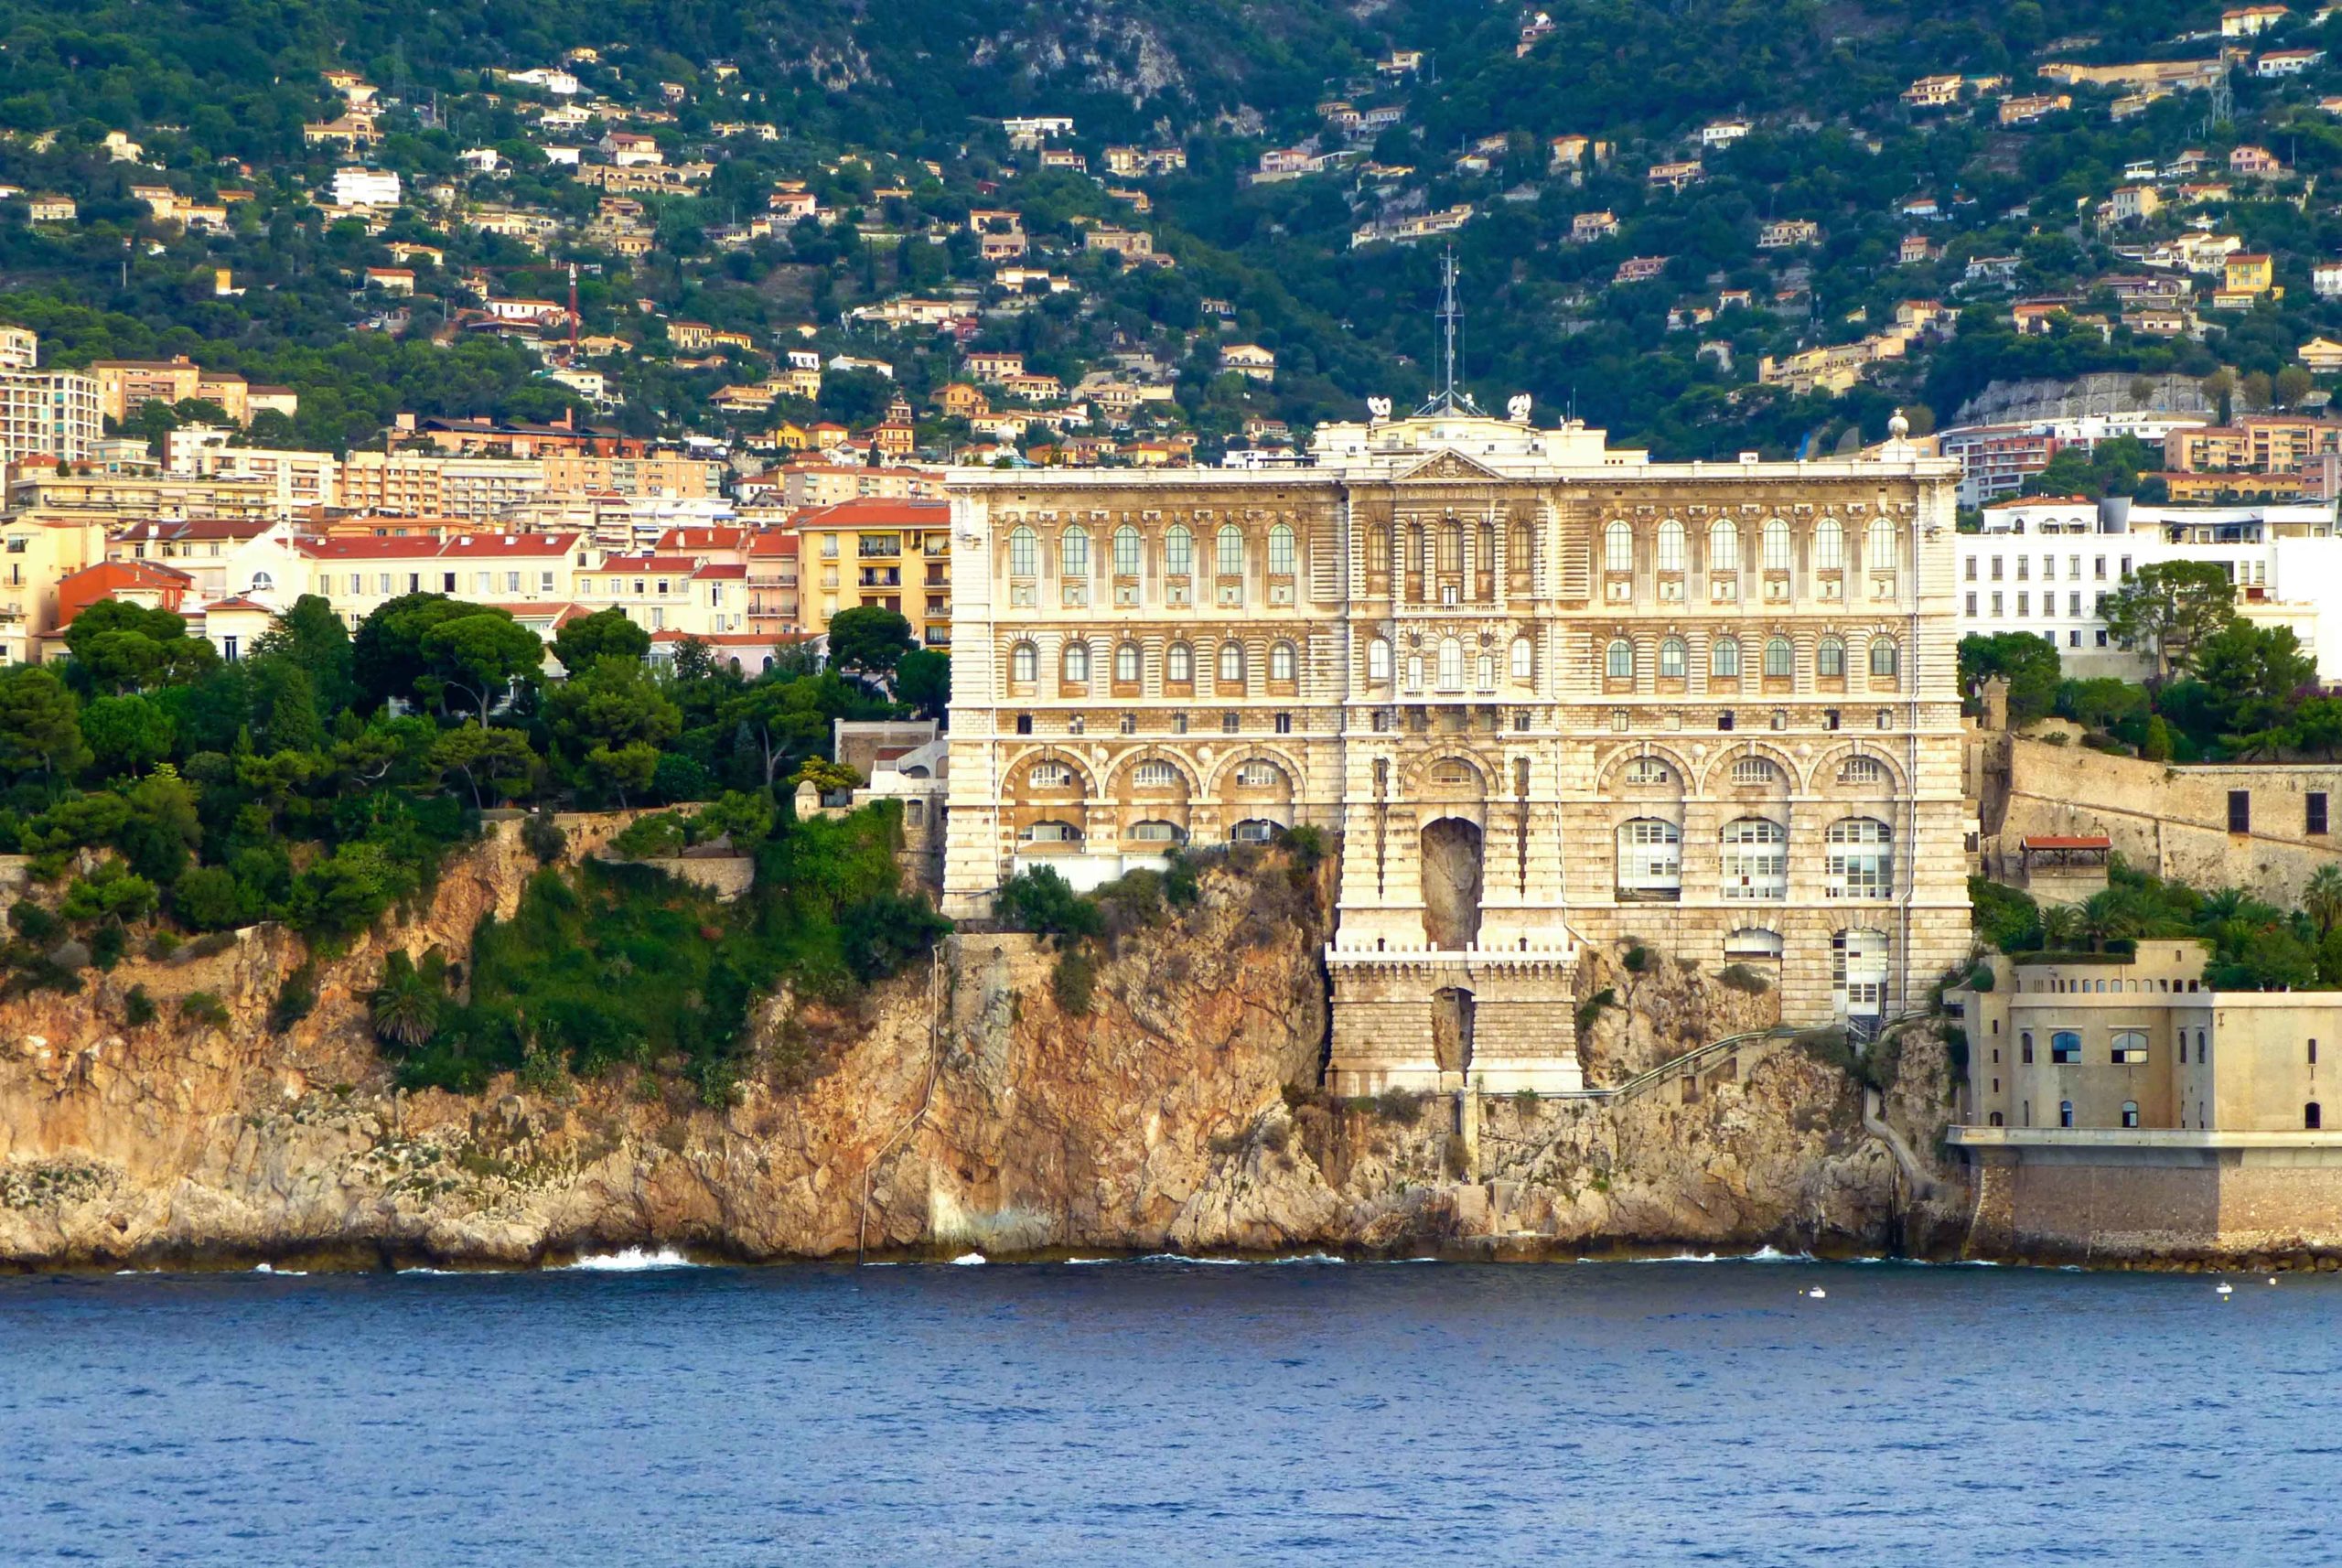 Monaco Oceanographic Museum - Rocher de Monaco © Edgar EI - licence [CC BY 3.0] from Wikimedia Commons